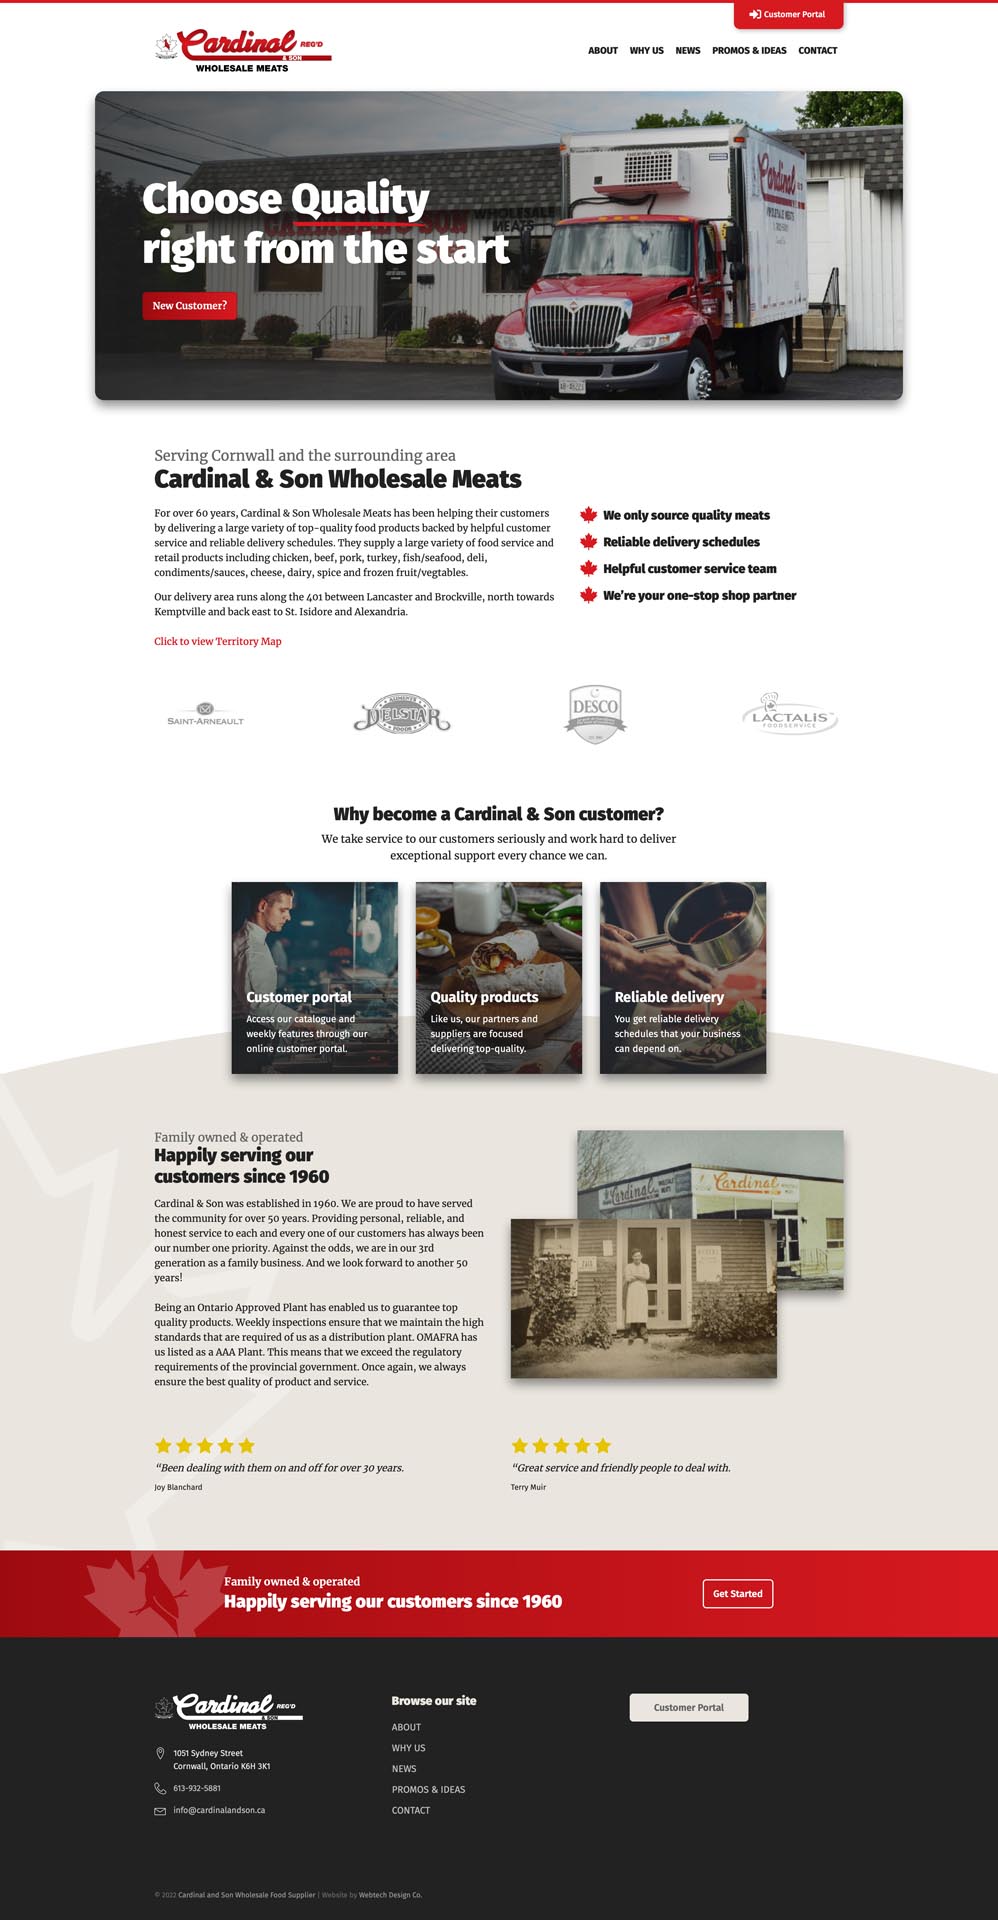 Small business website design services portfolio item for Cardinal and Son